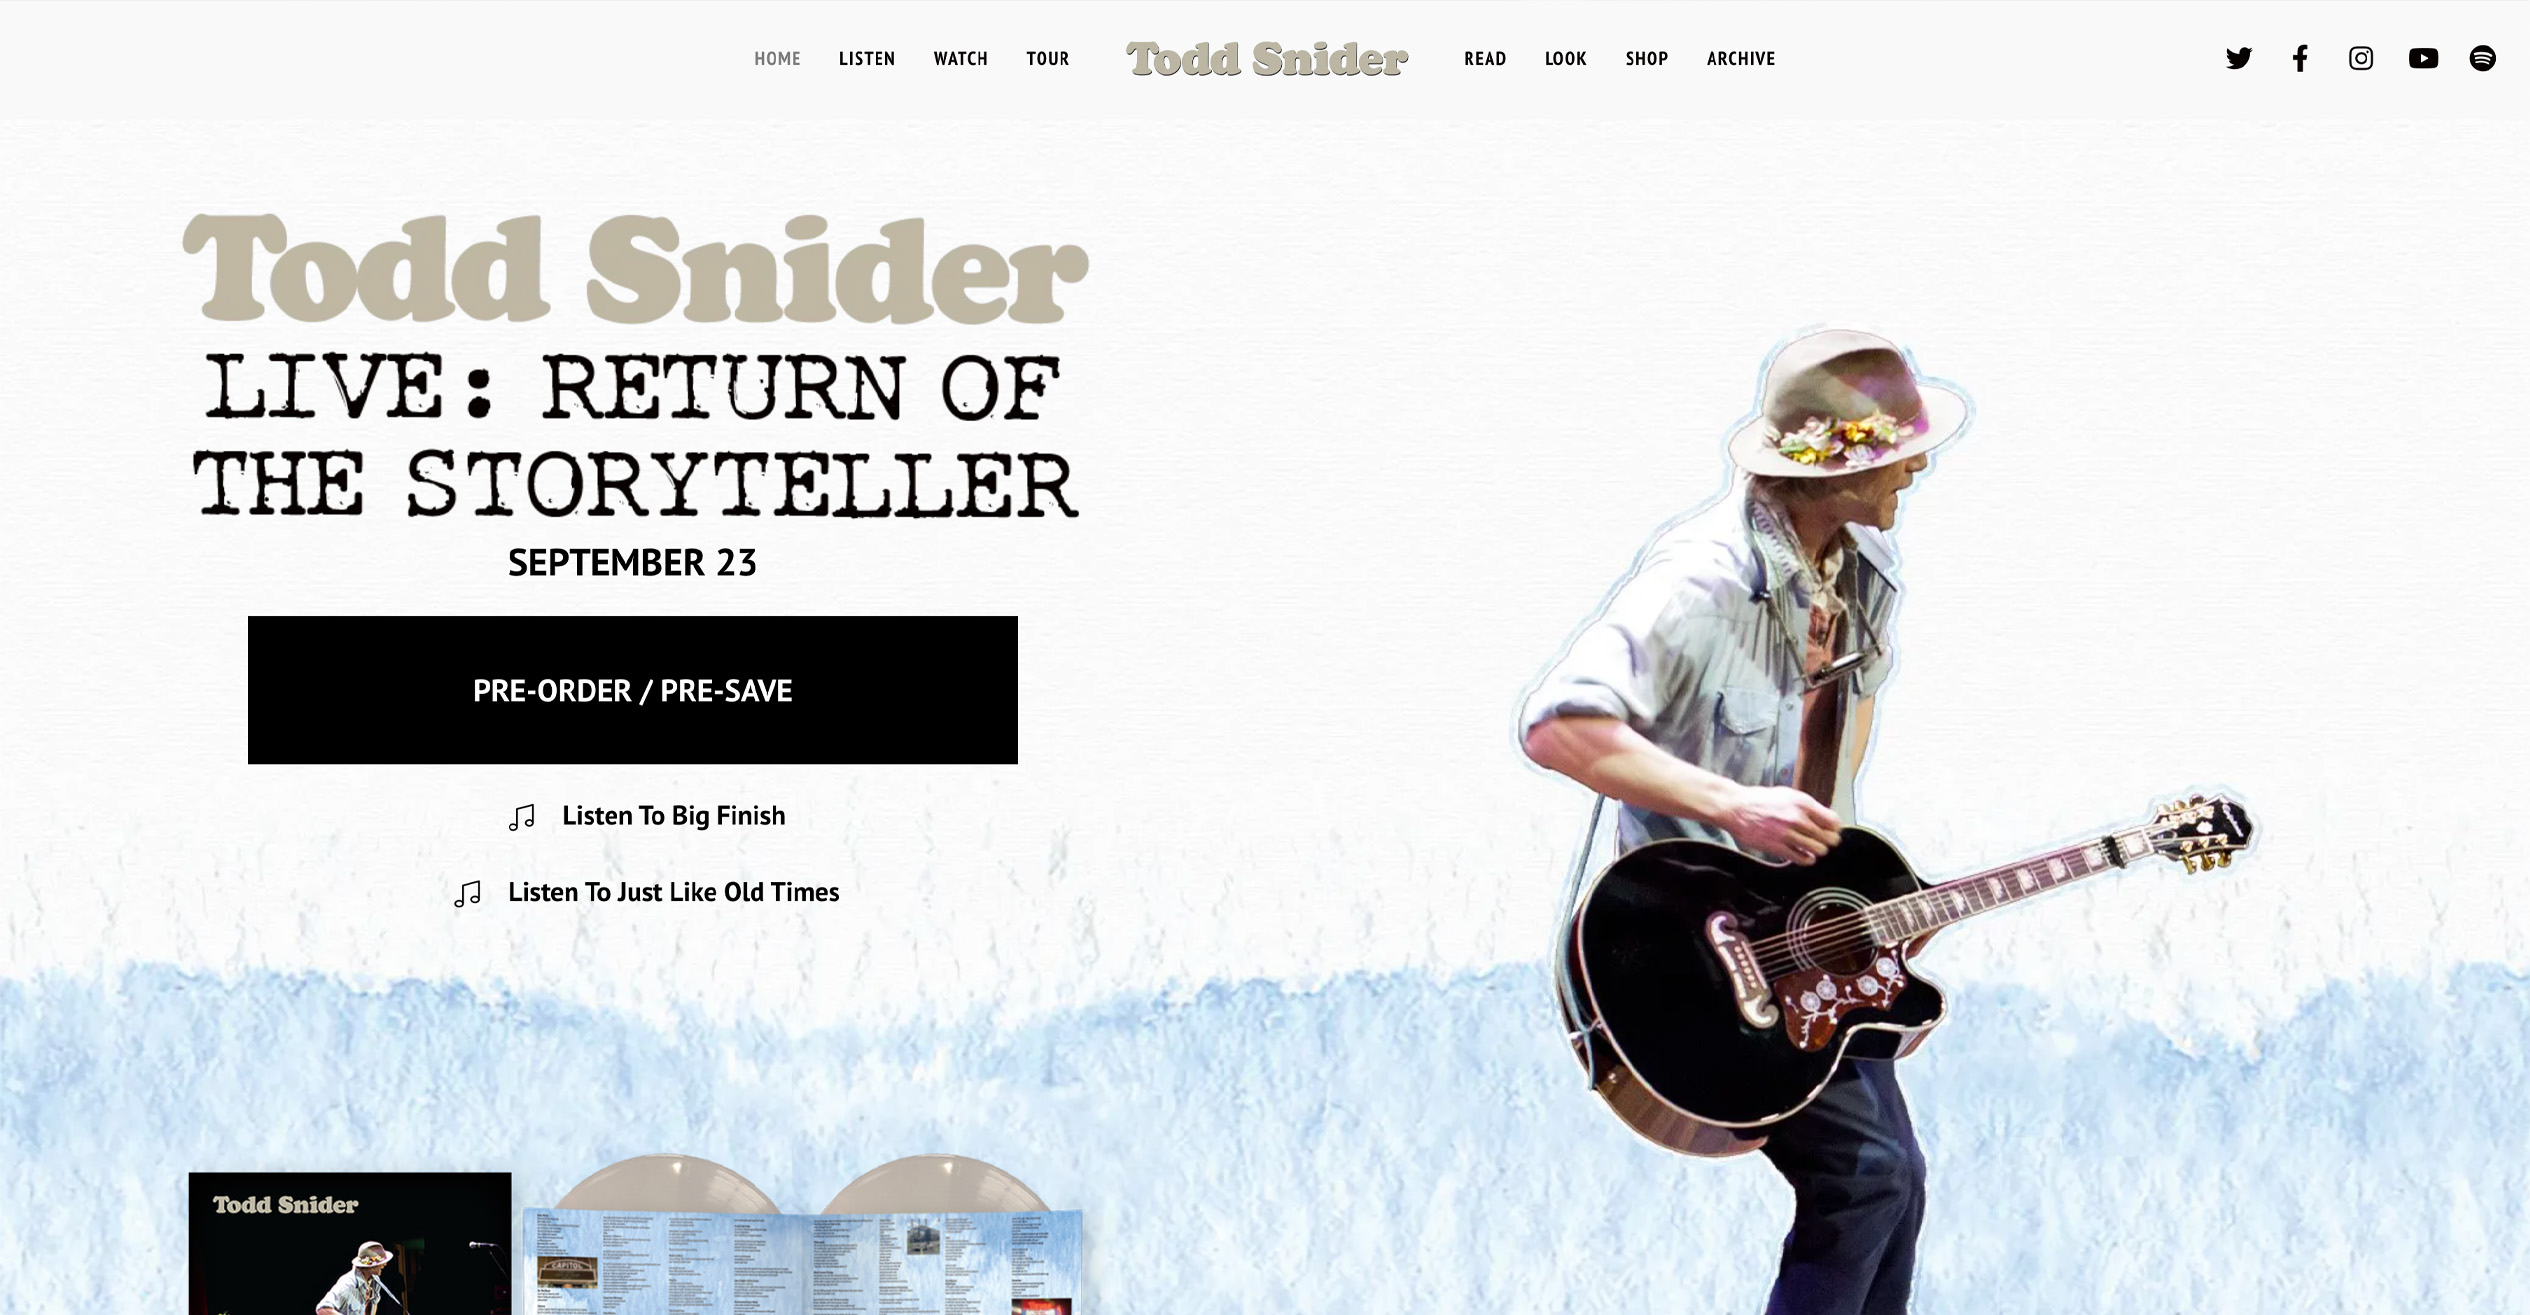 Todd Snider Toddsnider.net music artist web design service for musician